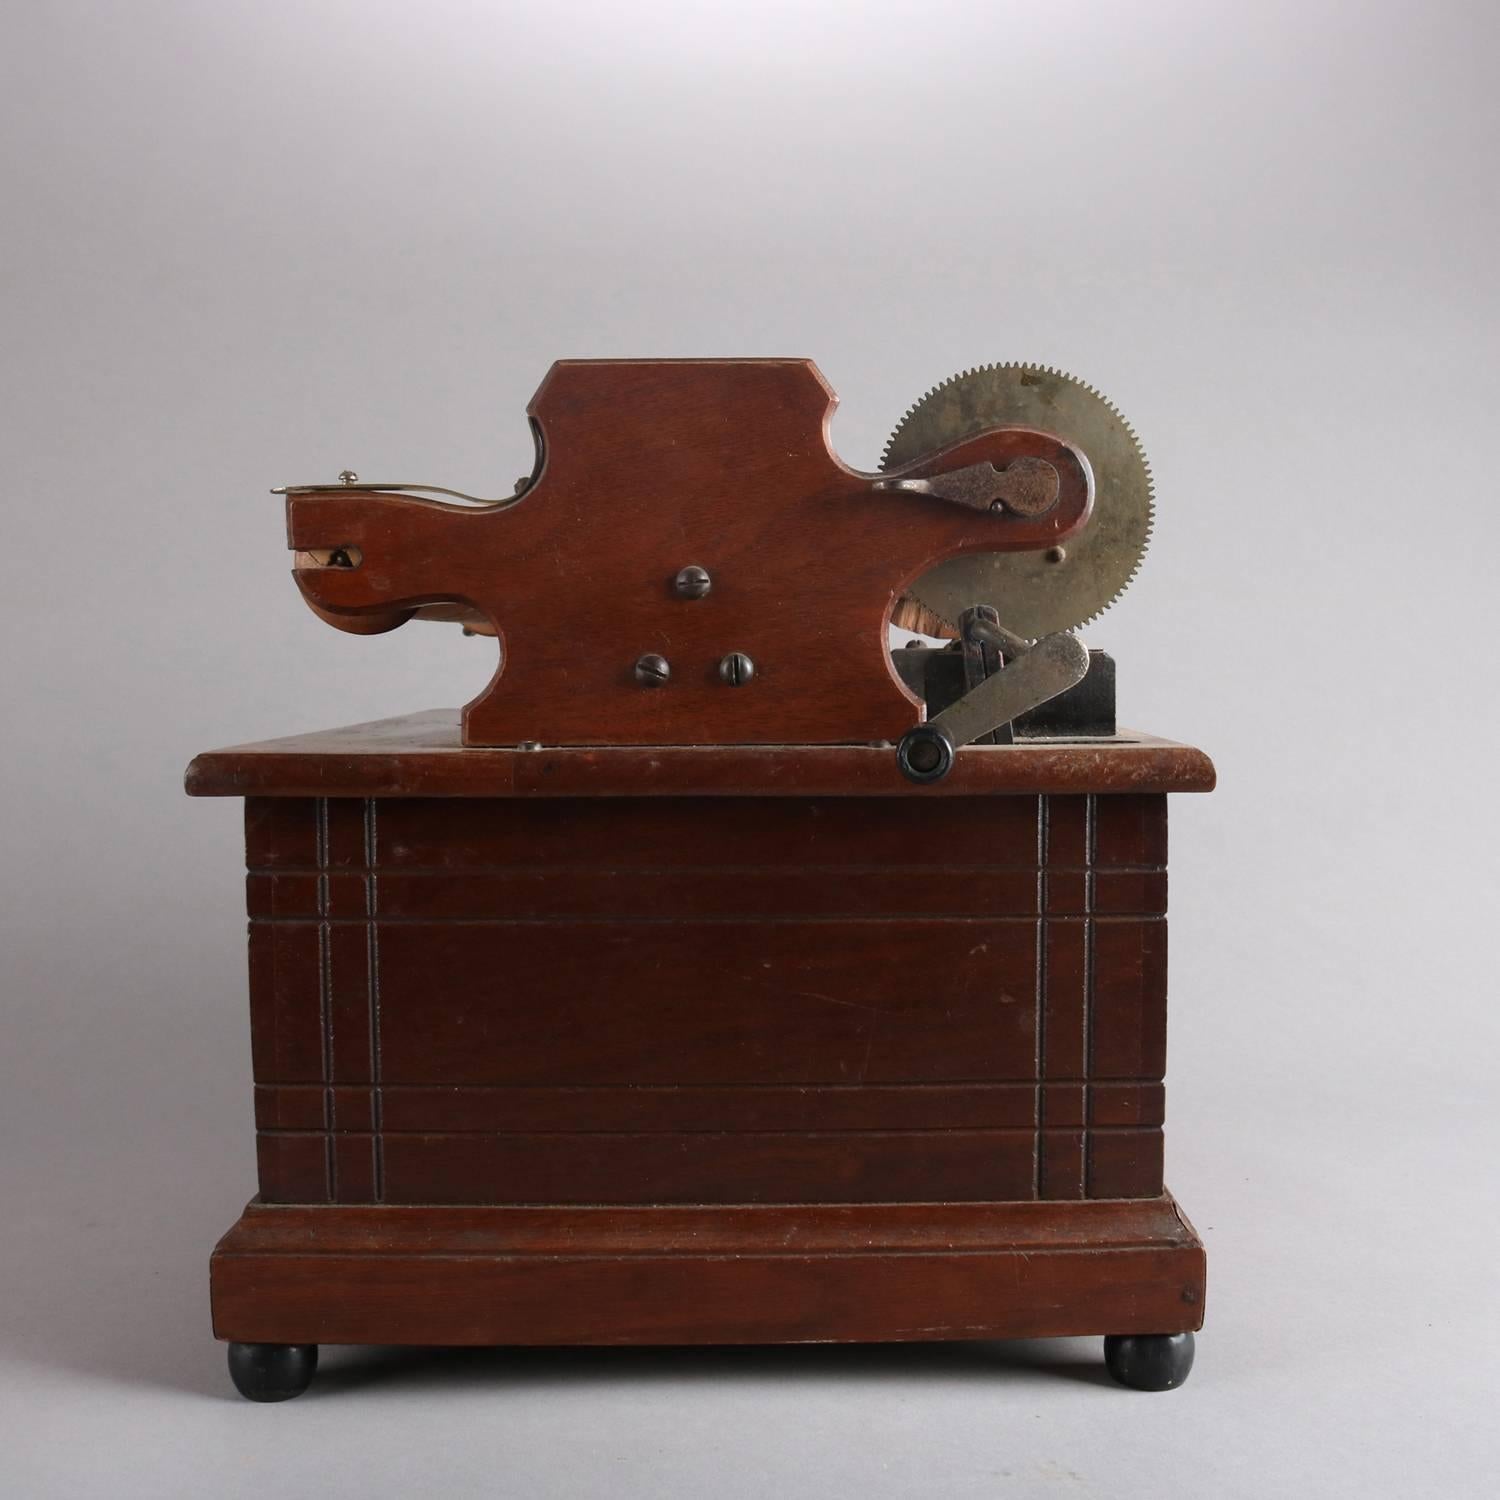 20th Century Antique Roller Organ in Ebonized Banded Walnut Case, 19th Century